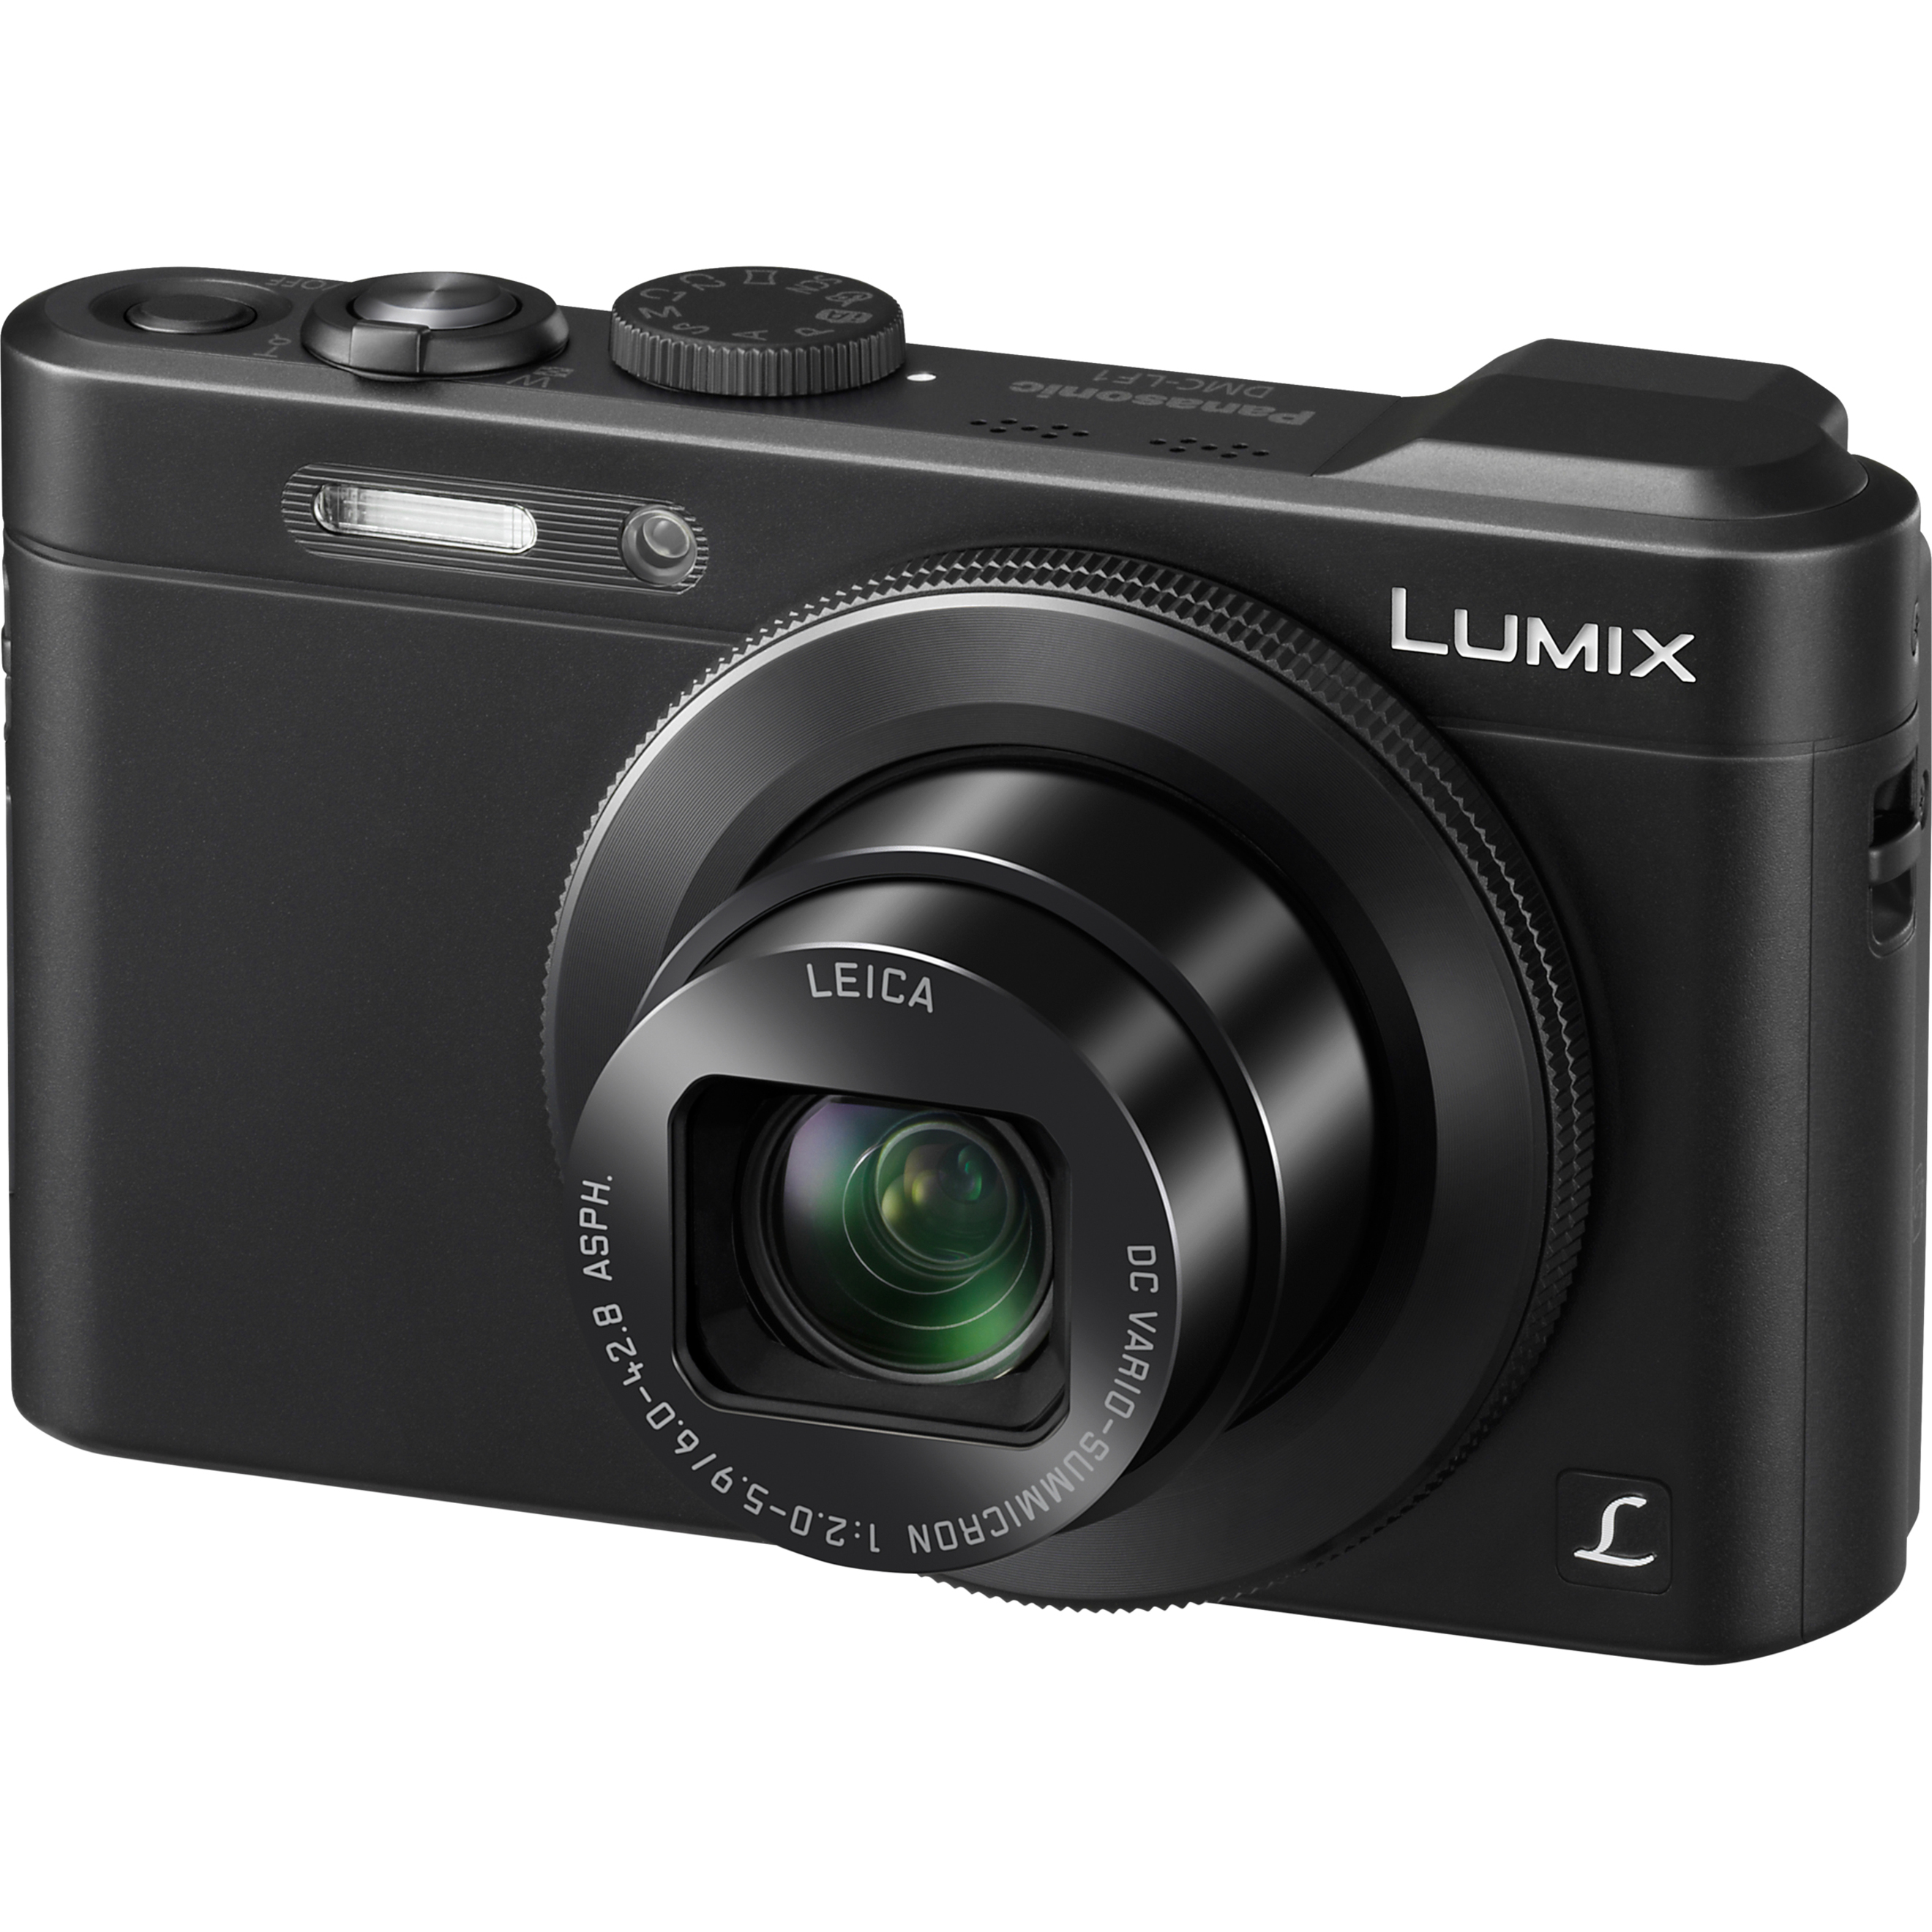 Panasonic Lumix DMC-LF1 12.1 Megapixel Bridge Camera, Black - image 4 of 5